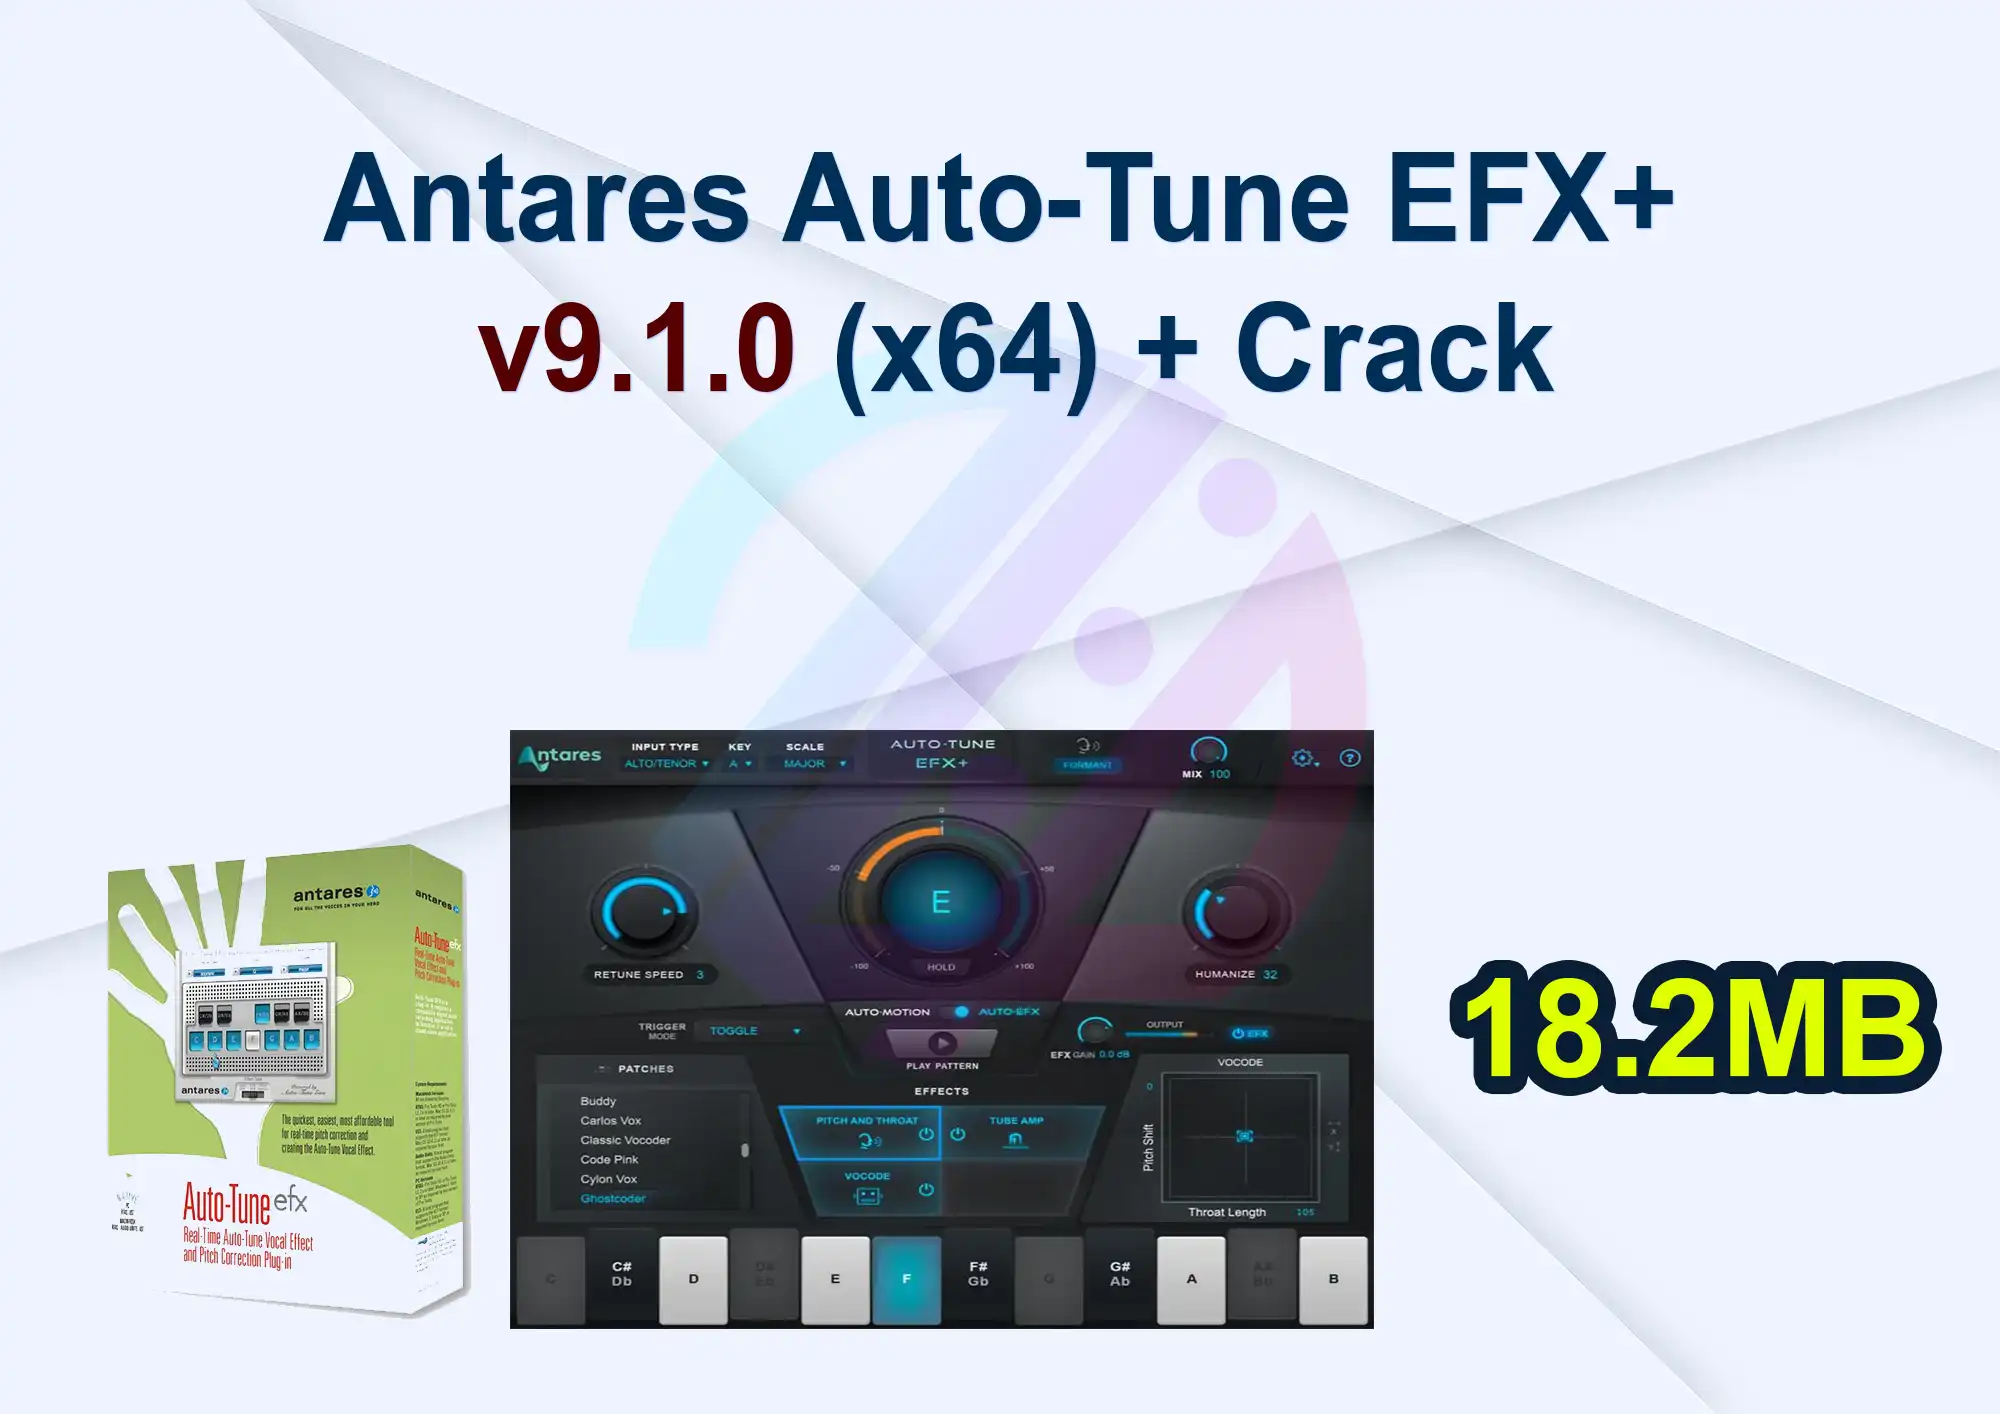 Antares Auto-Tune EFX+ v9.1.0 (x64) + Crack